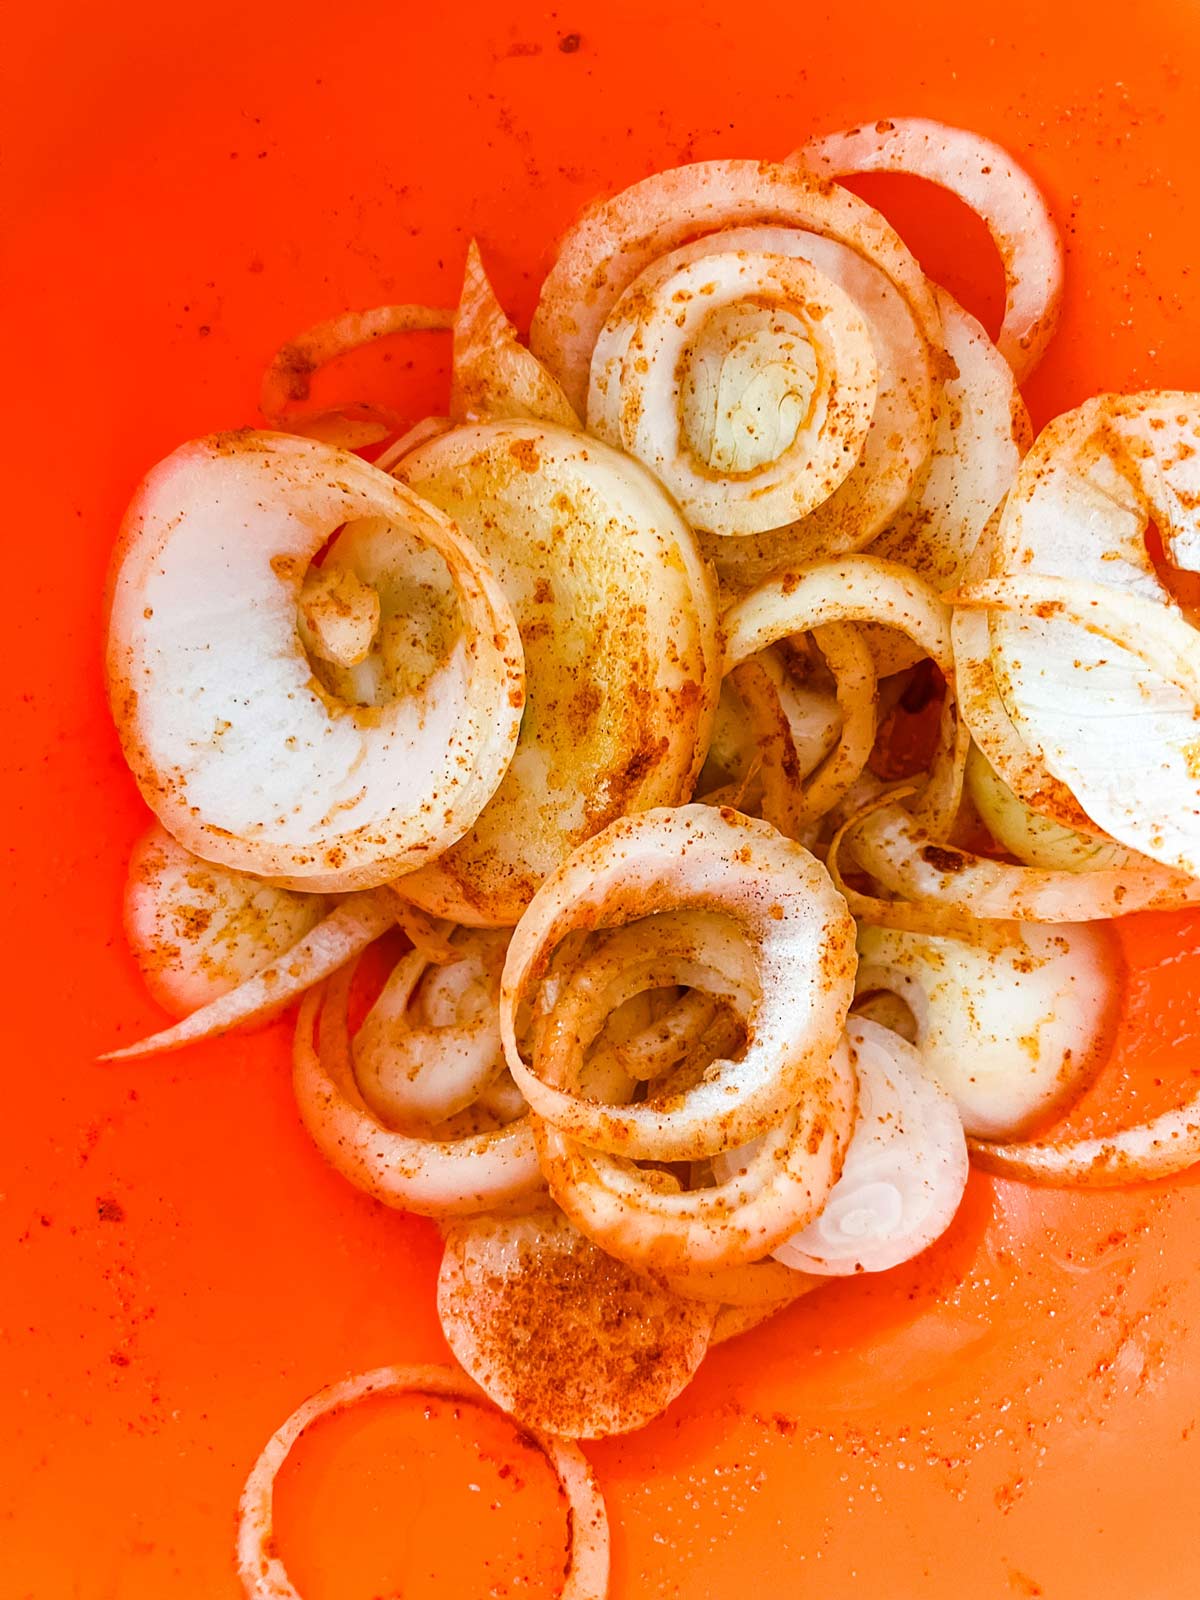 Seasonings tossed with sliced onions in an orange bowl.